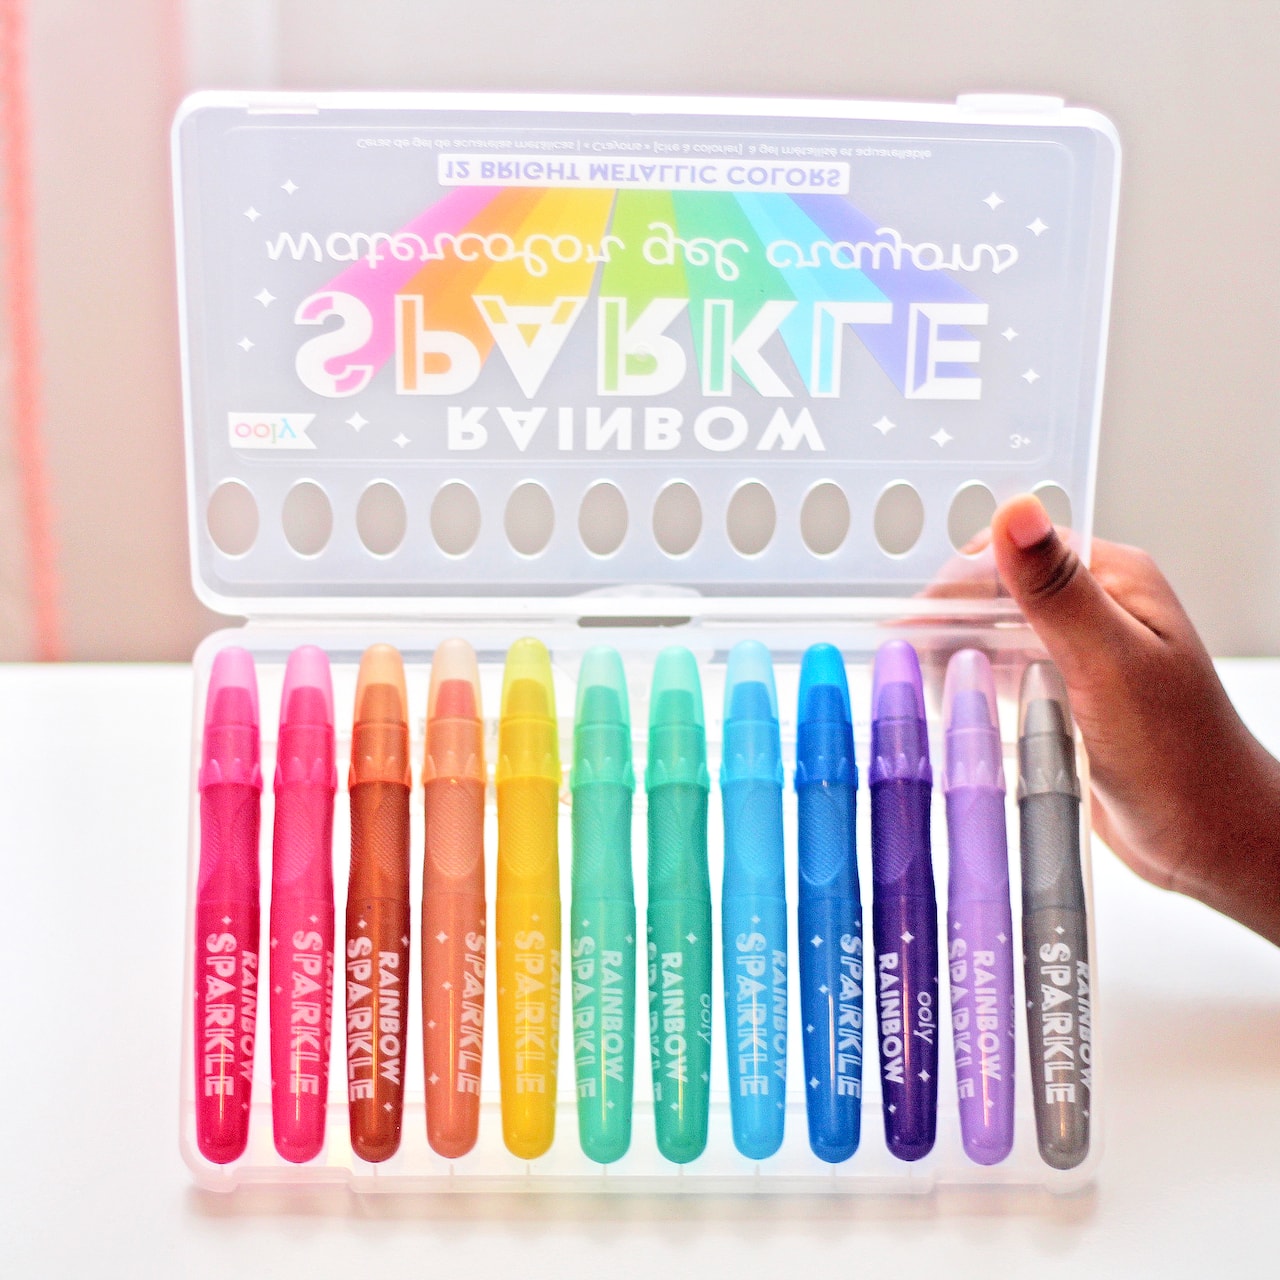 OOLY Rainbow Sparkle Metallic Watercolor Gel Crayons, 12ct.